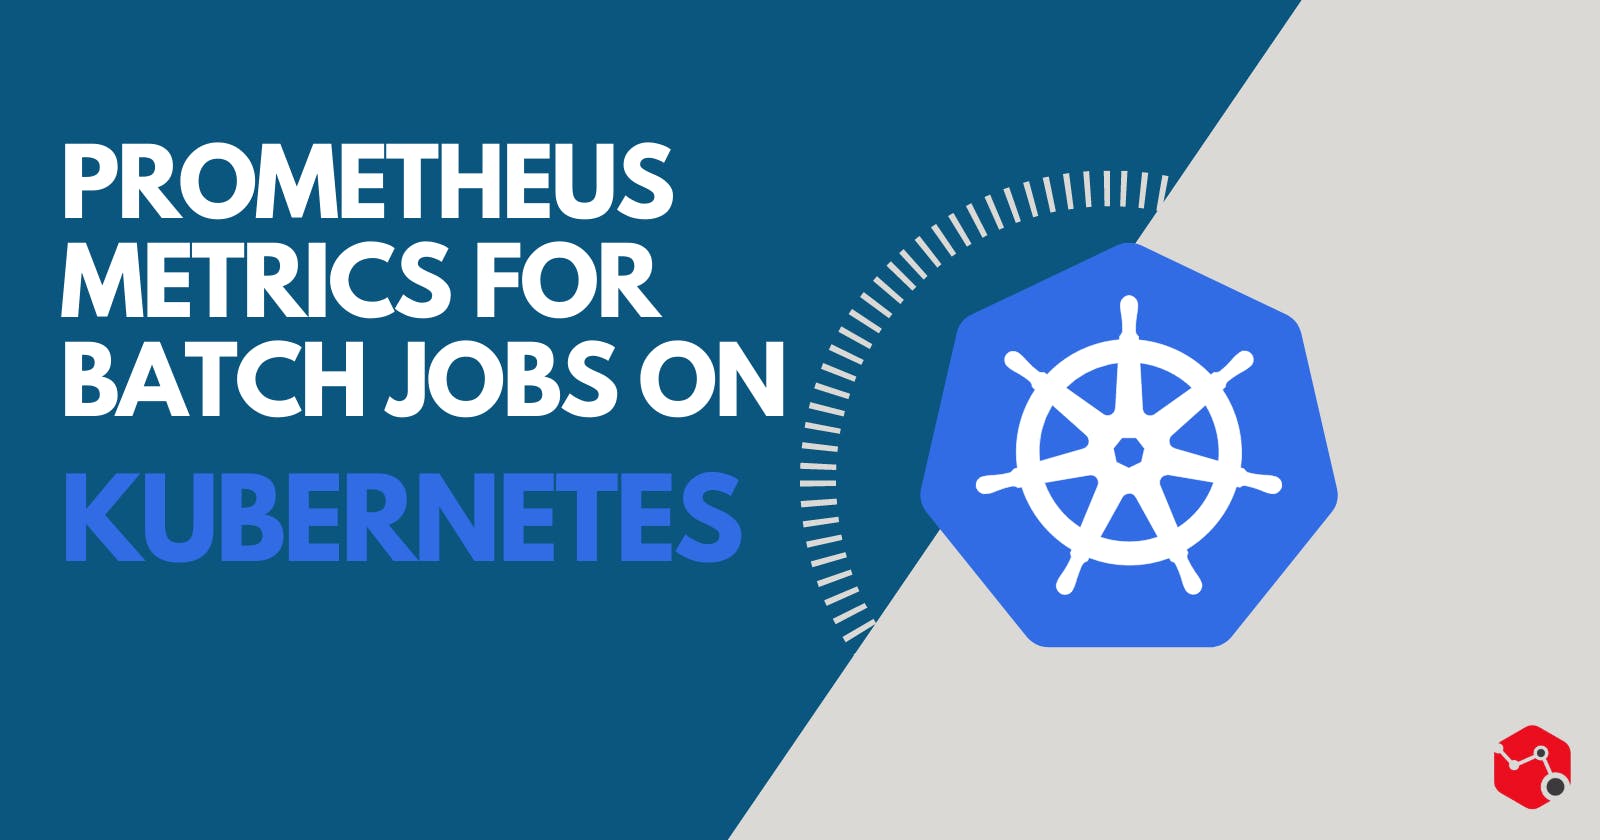 Prometheus Metrics for Batch Jobs on Kubernetes